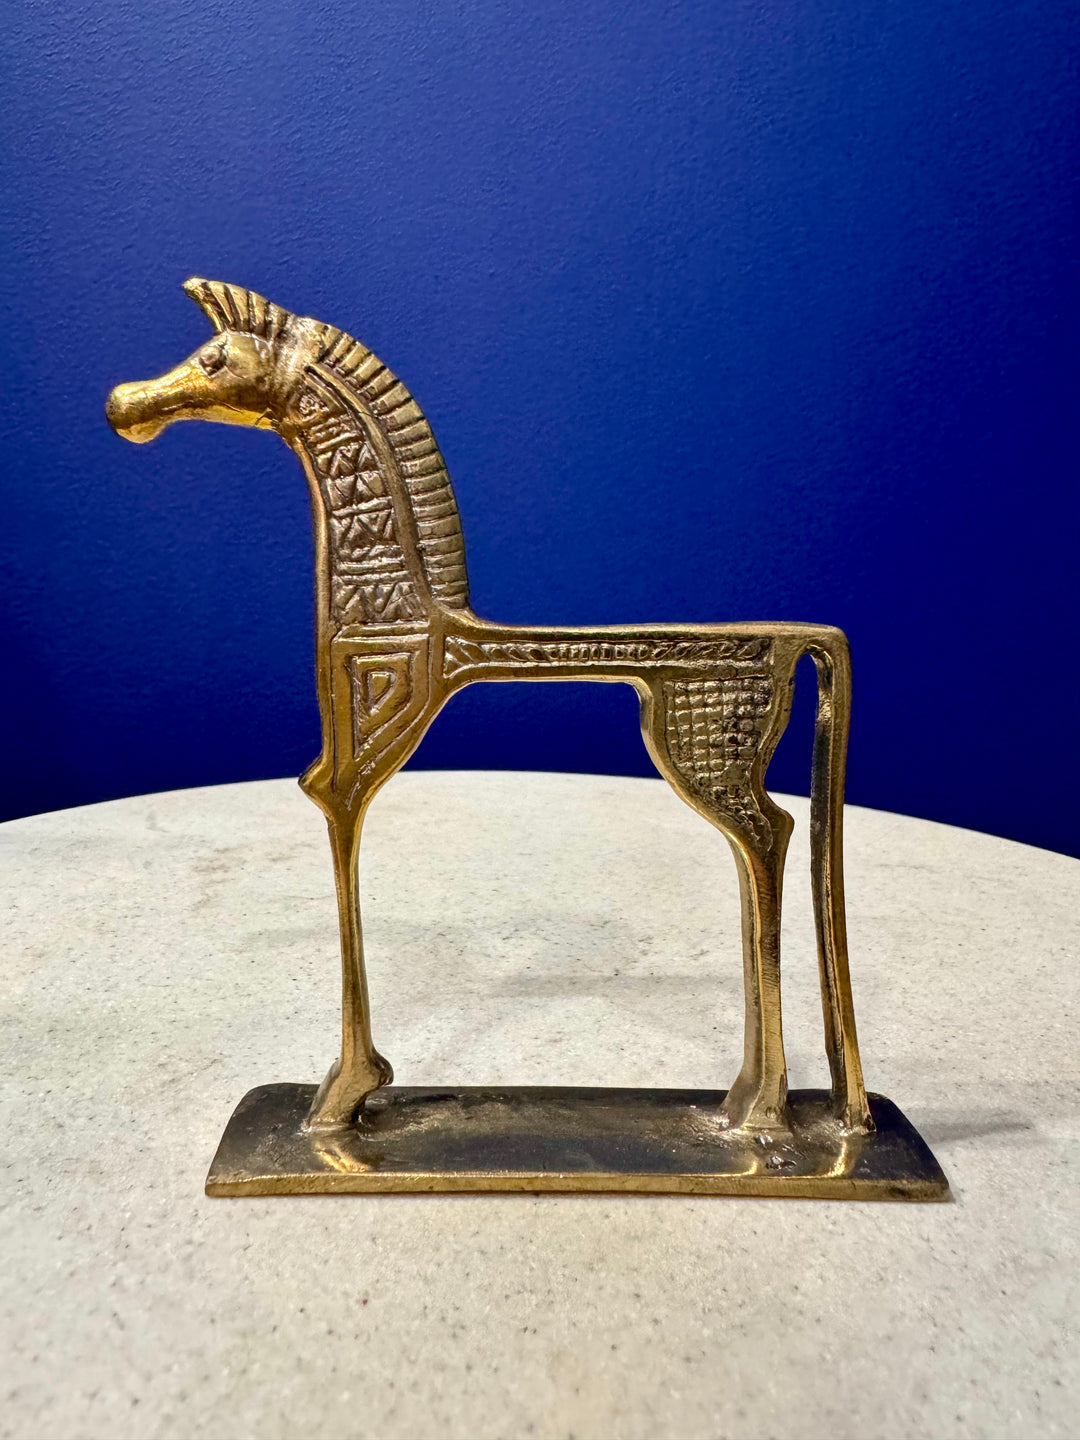 Brass Trojan Horse